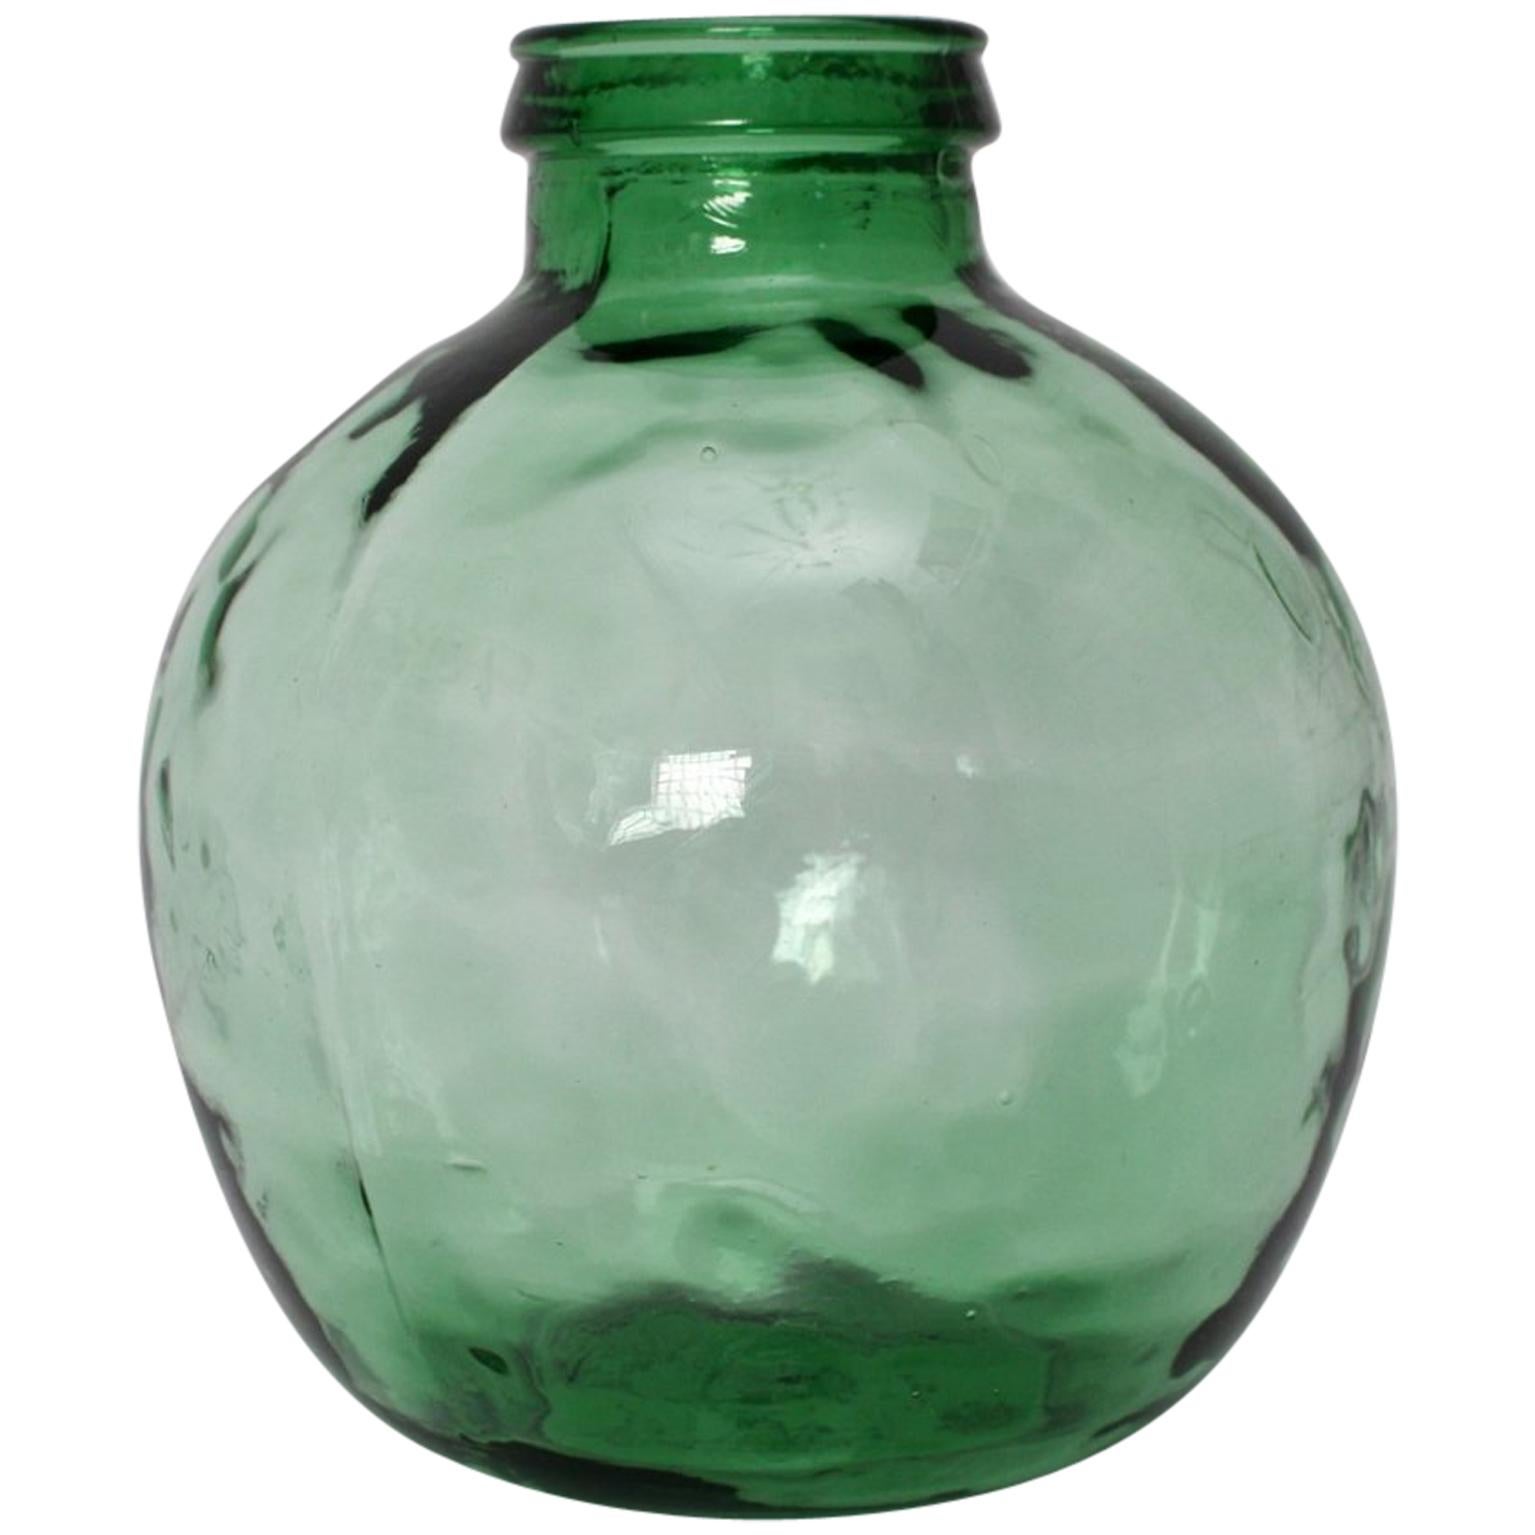 Green Handblown Vintage Glass Bottle Demijohn by Viresa, 1970s